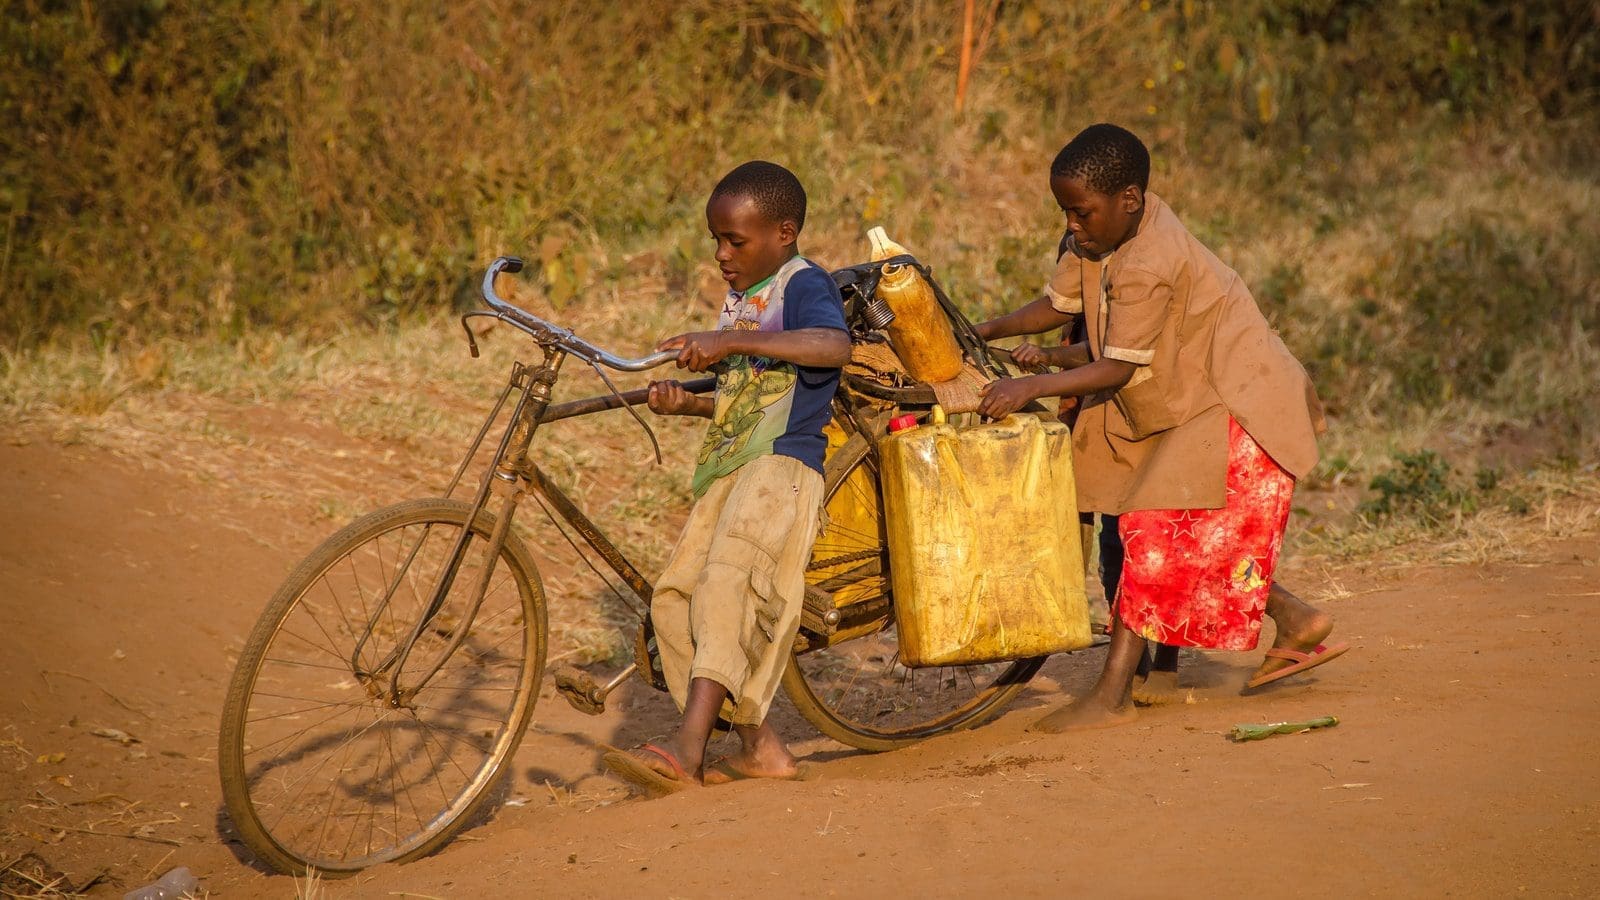 blockchain marketplace water crisistwo kids using brown bike with cargo